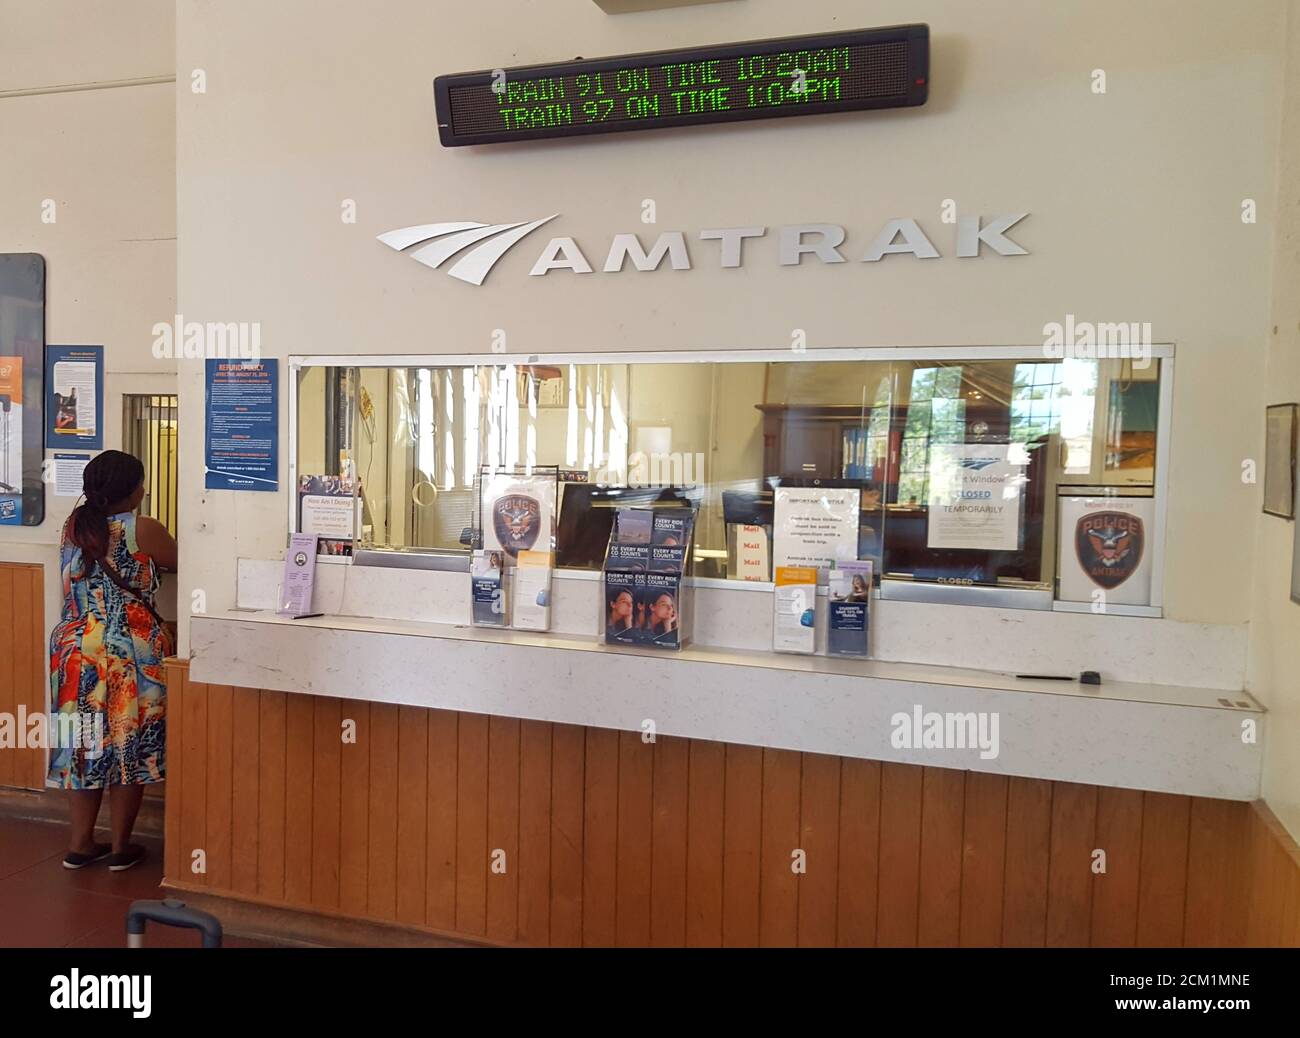 The train ticket booth at the Orlando Health/Amtrak train station, Orlando, Florida, United States Stock Photo